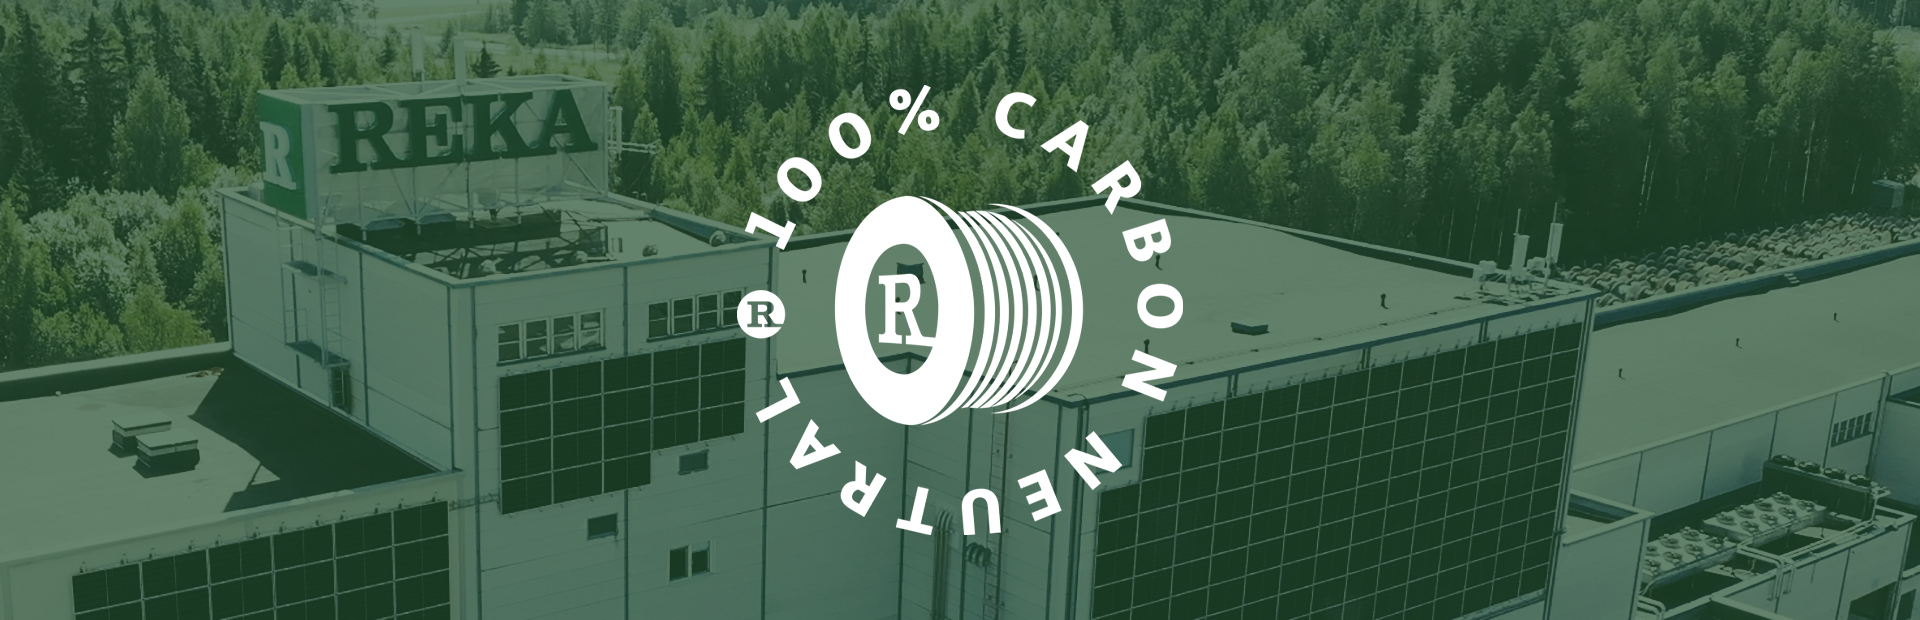 Reka Cables Carbon Neutral logo and Riihimäki factory